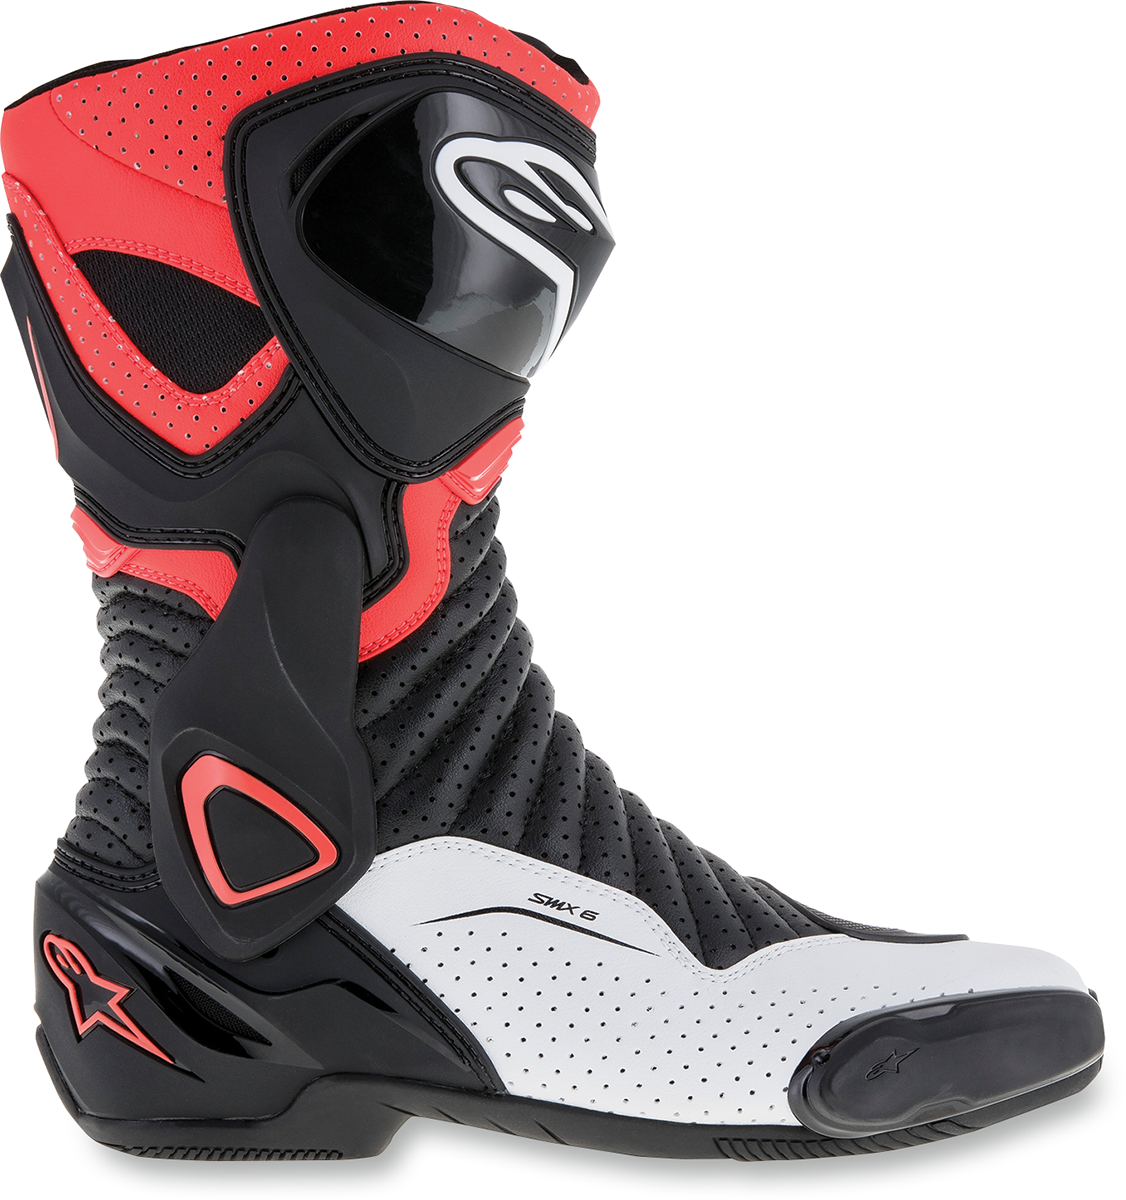 ALPINESTARS SMX-6 v2 Vented Boots - Black/White/Red Fluorescent - US 3.5 / EU 36 2223017-1320-36